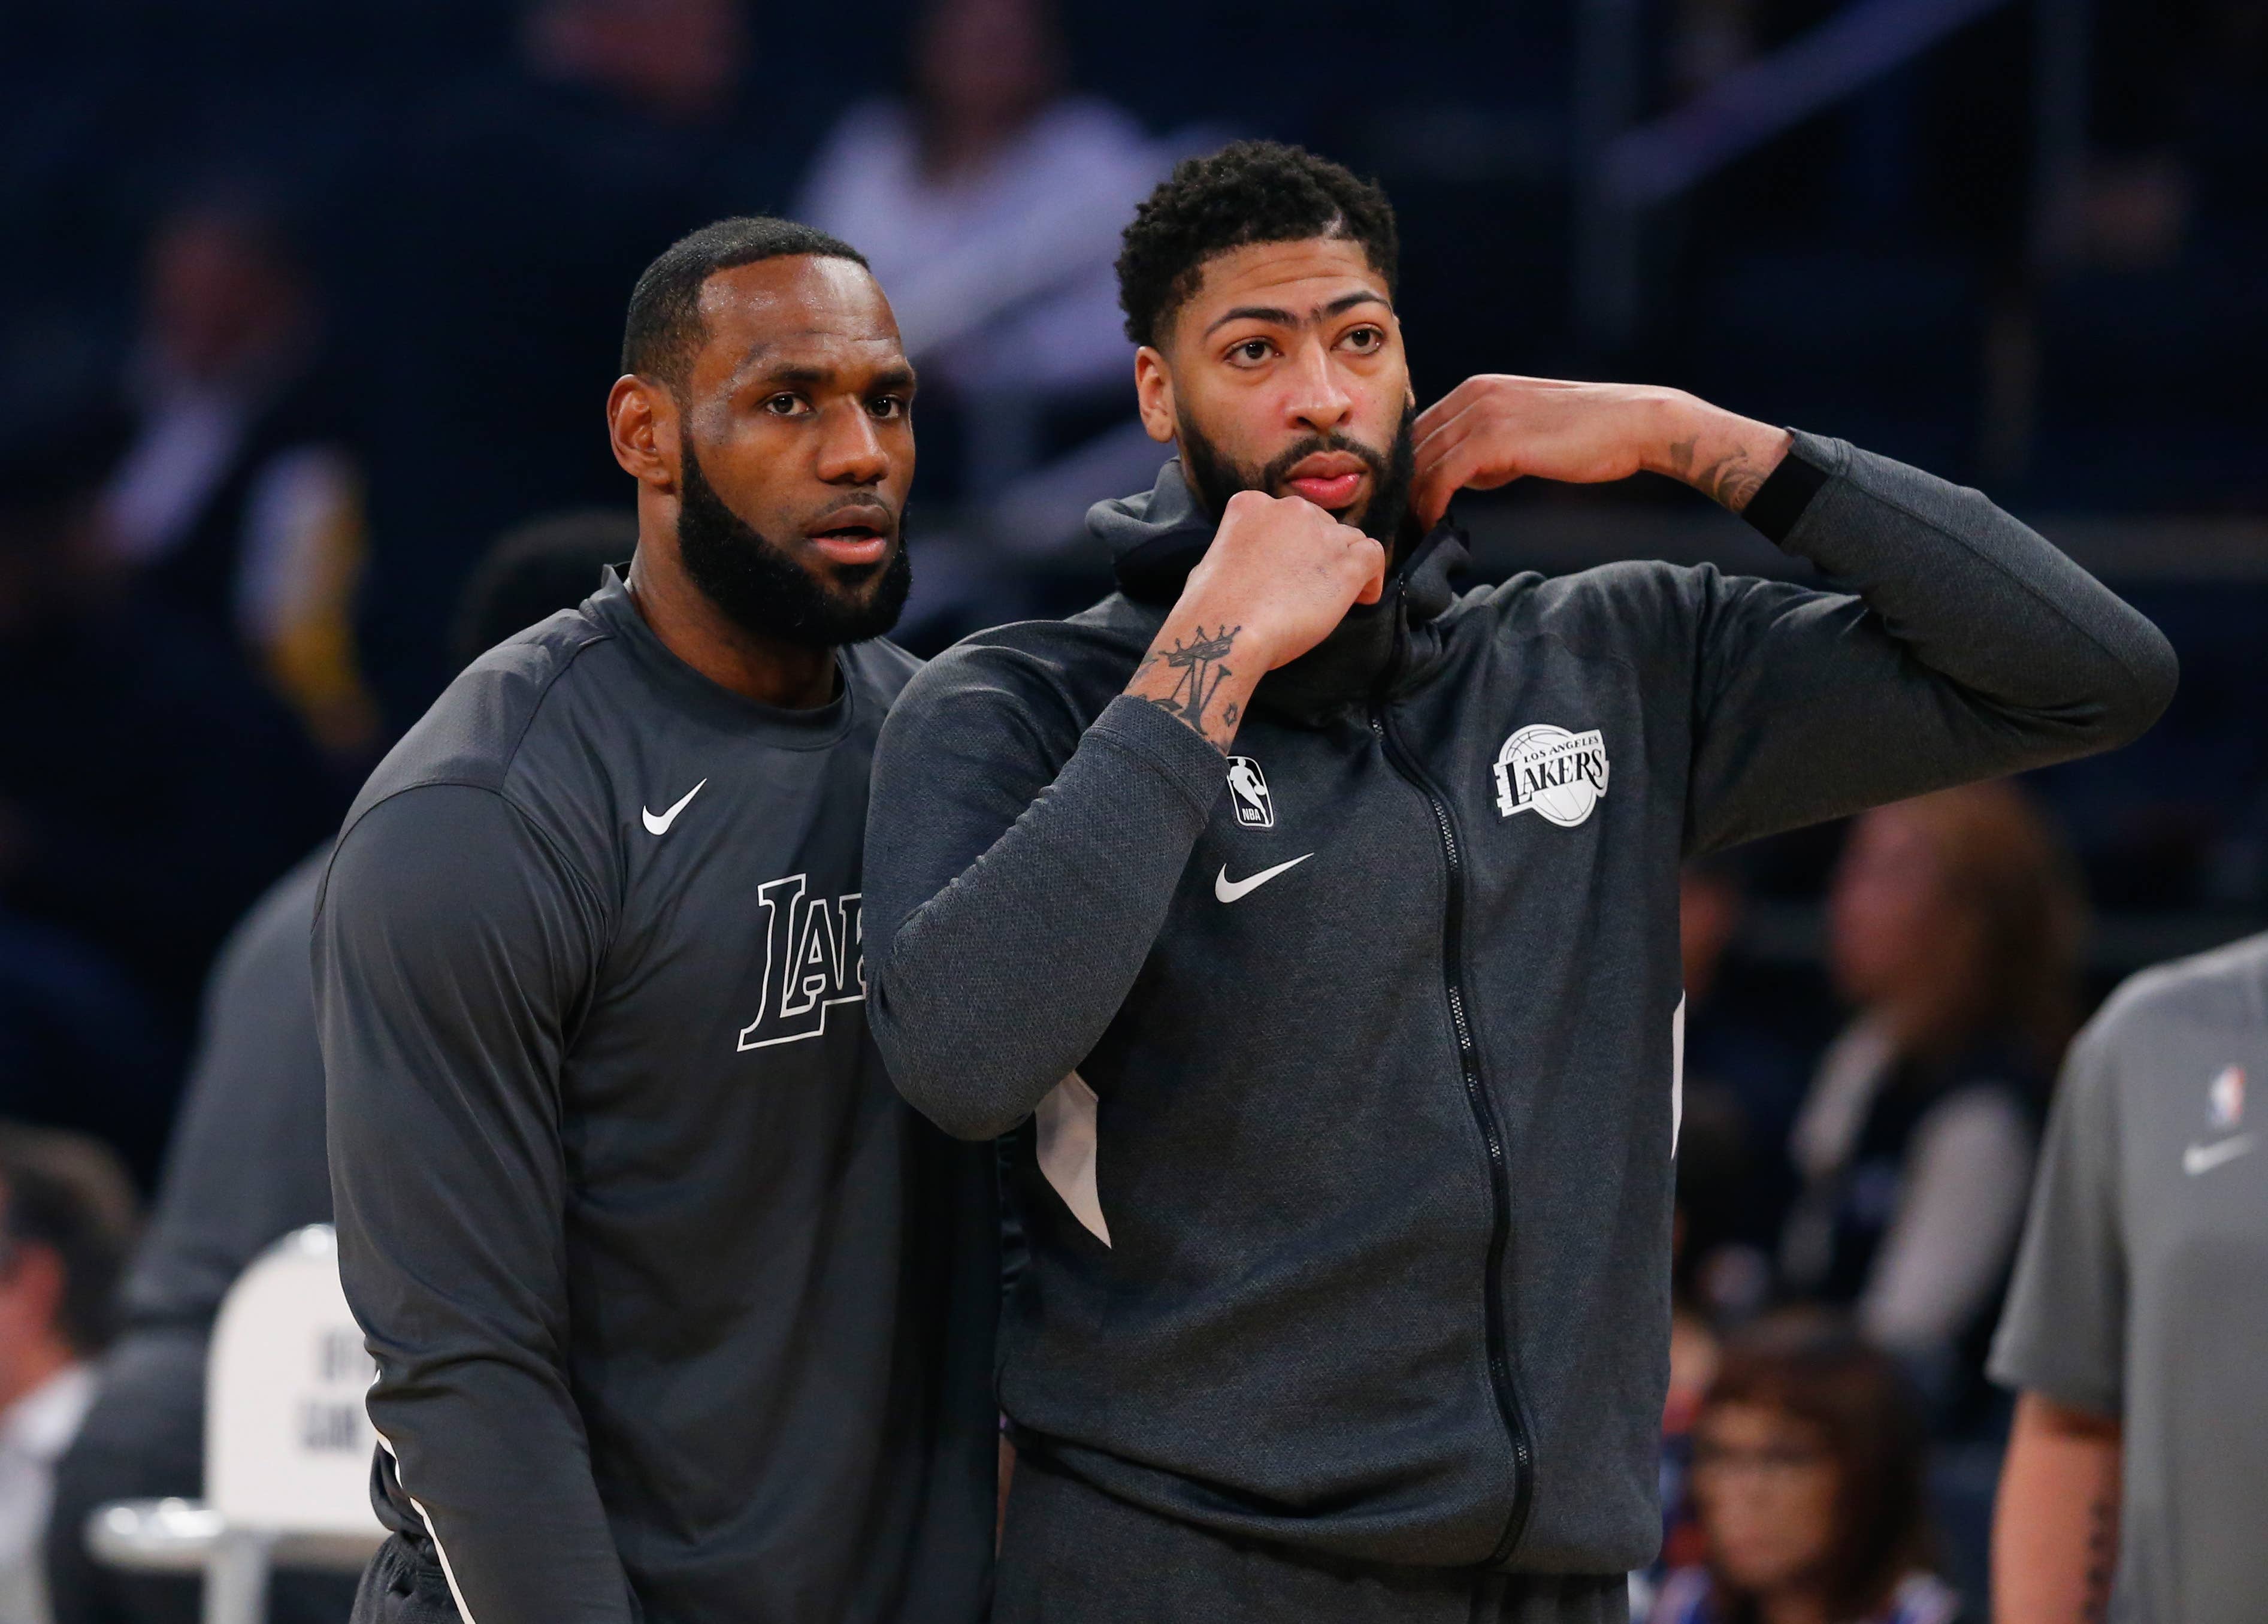 Wizards' Kyle Kuzma blasts Nike for 'ruining' NBA jerseys